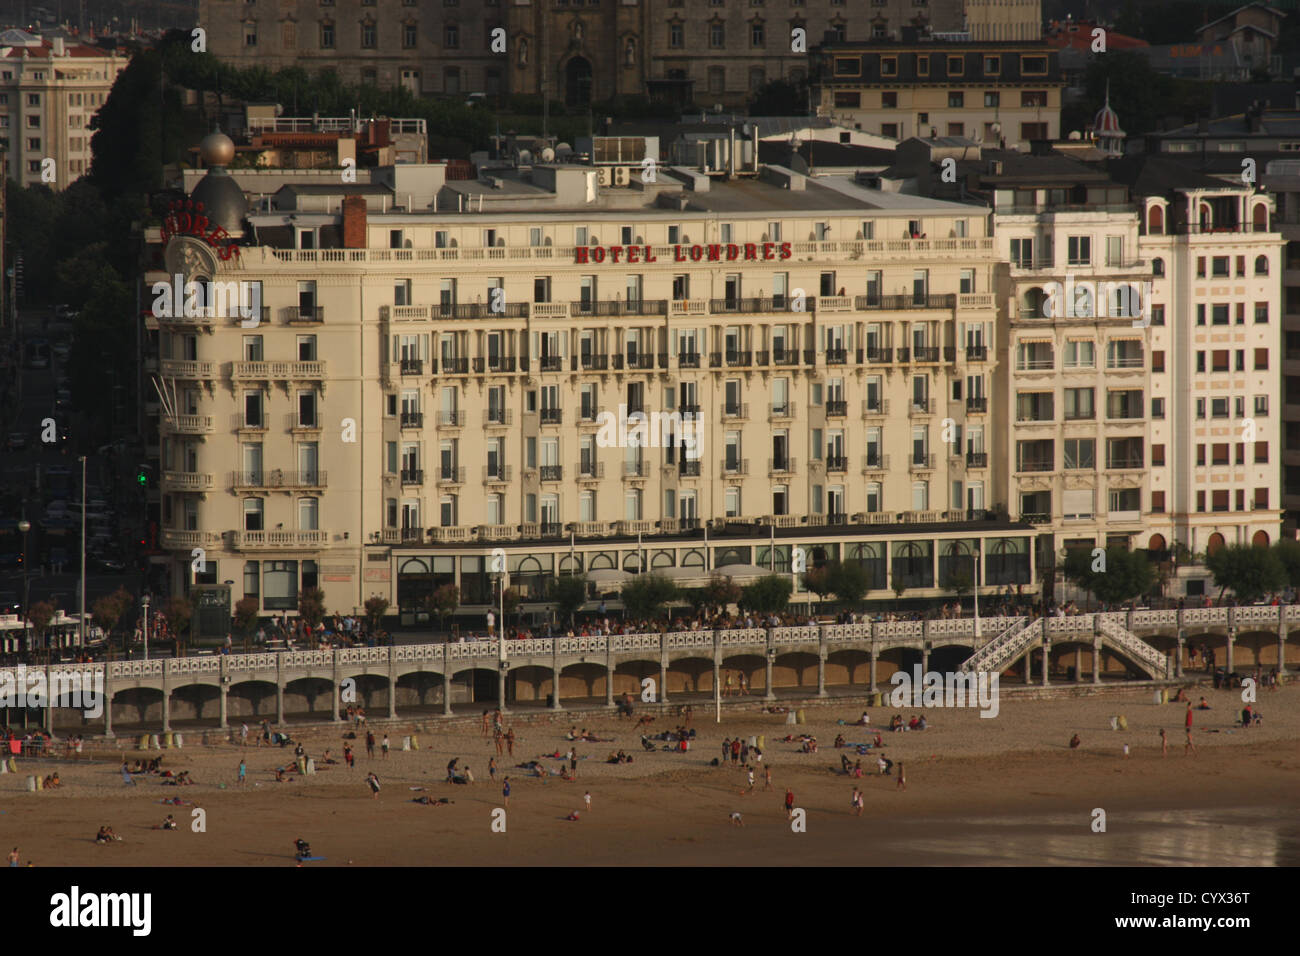 Hotel Londres by the Playa de la Concha in San Sebastian Stock Photo - Alamy